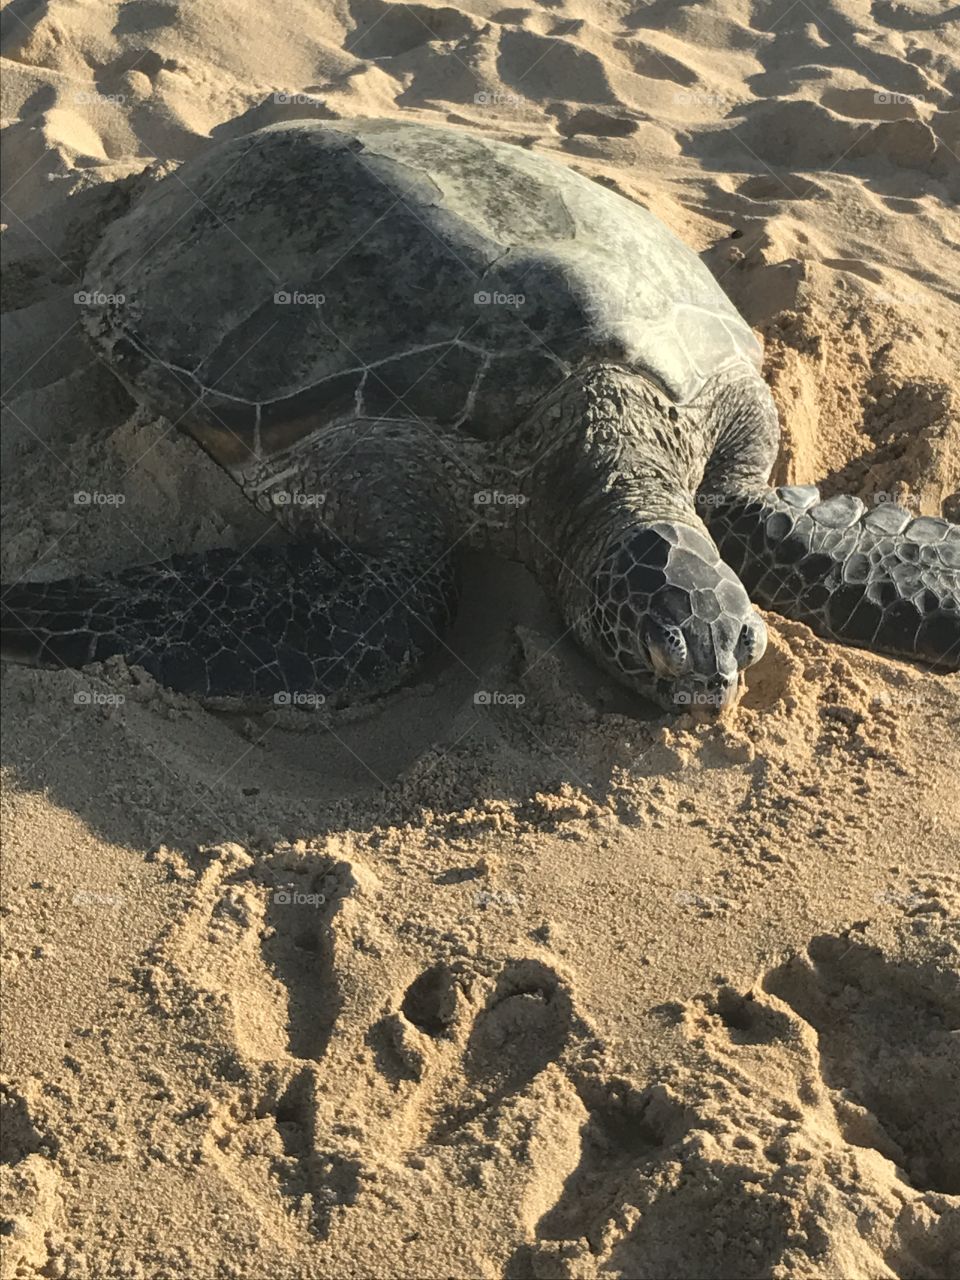 Large Adult Turtle on beach in Maui